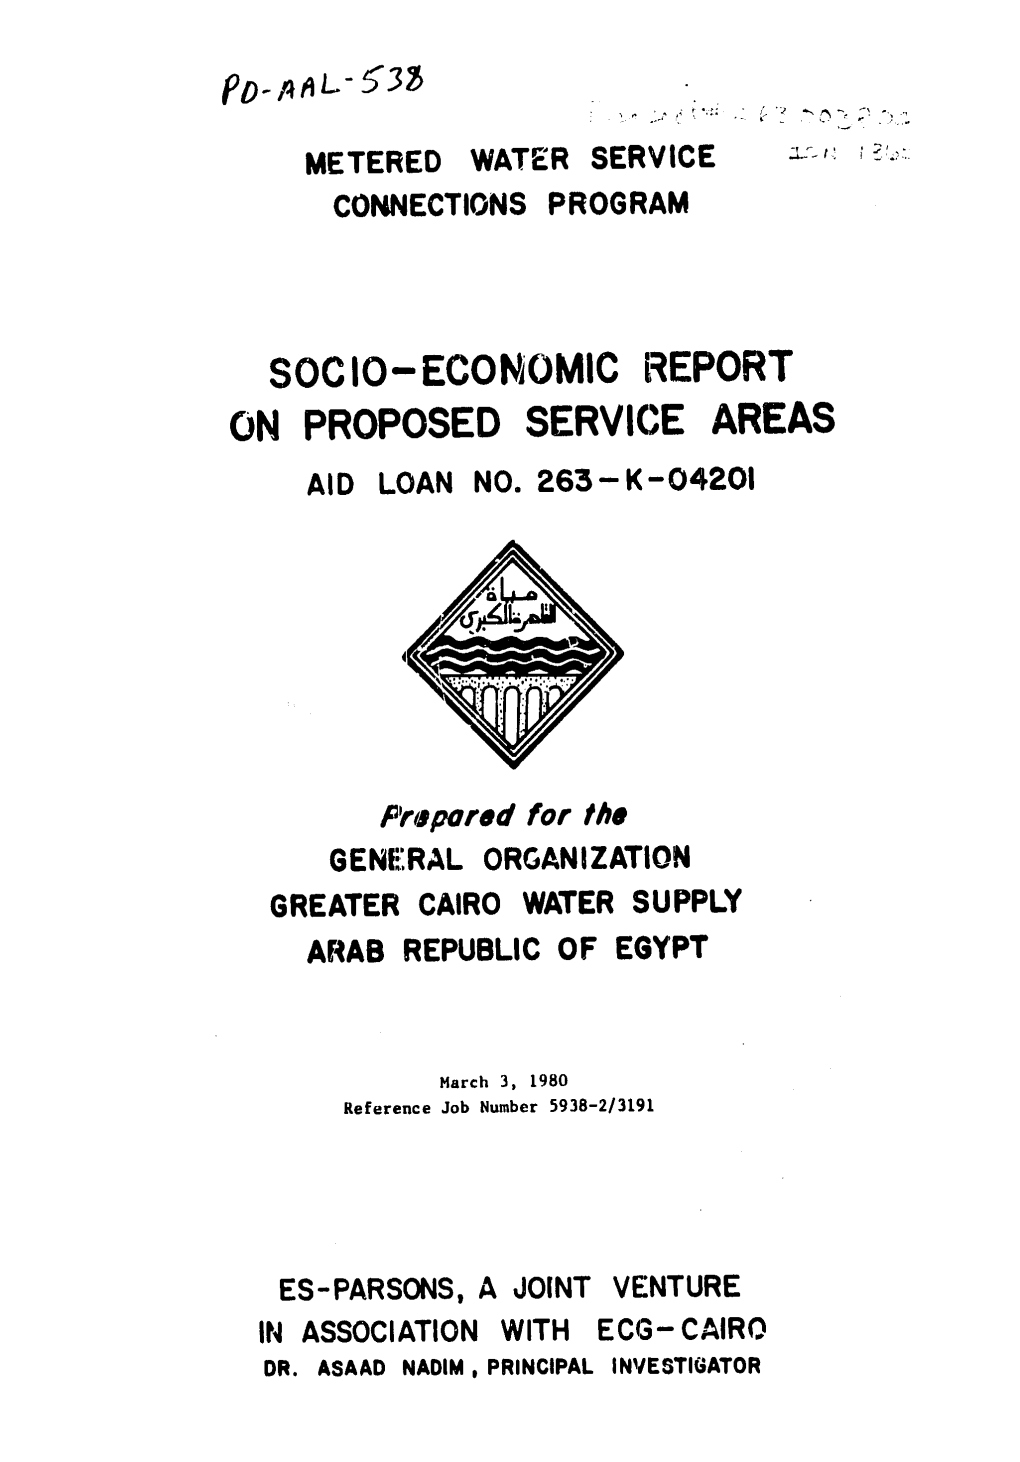 Soc Io-Economic Report on Proposed Service Areas Aid Loan No